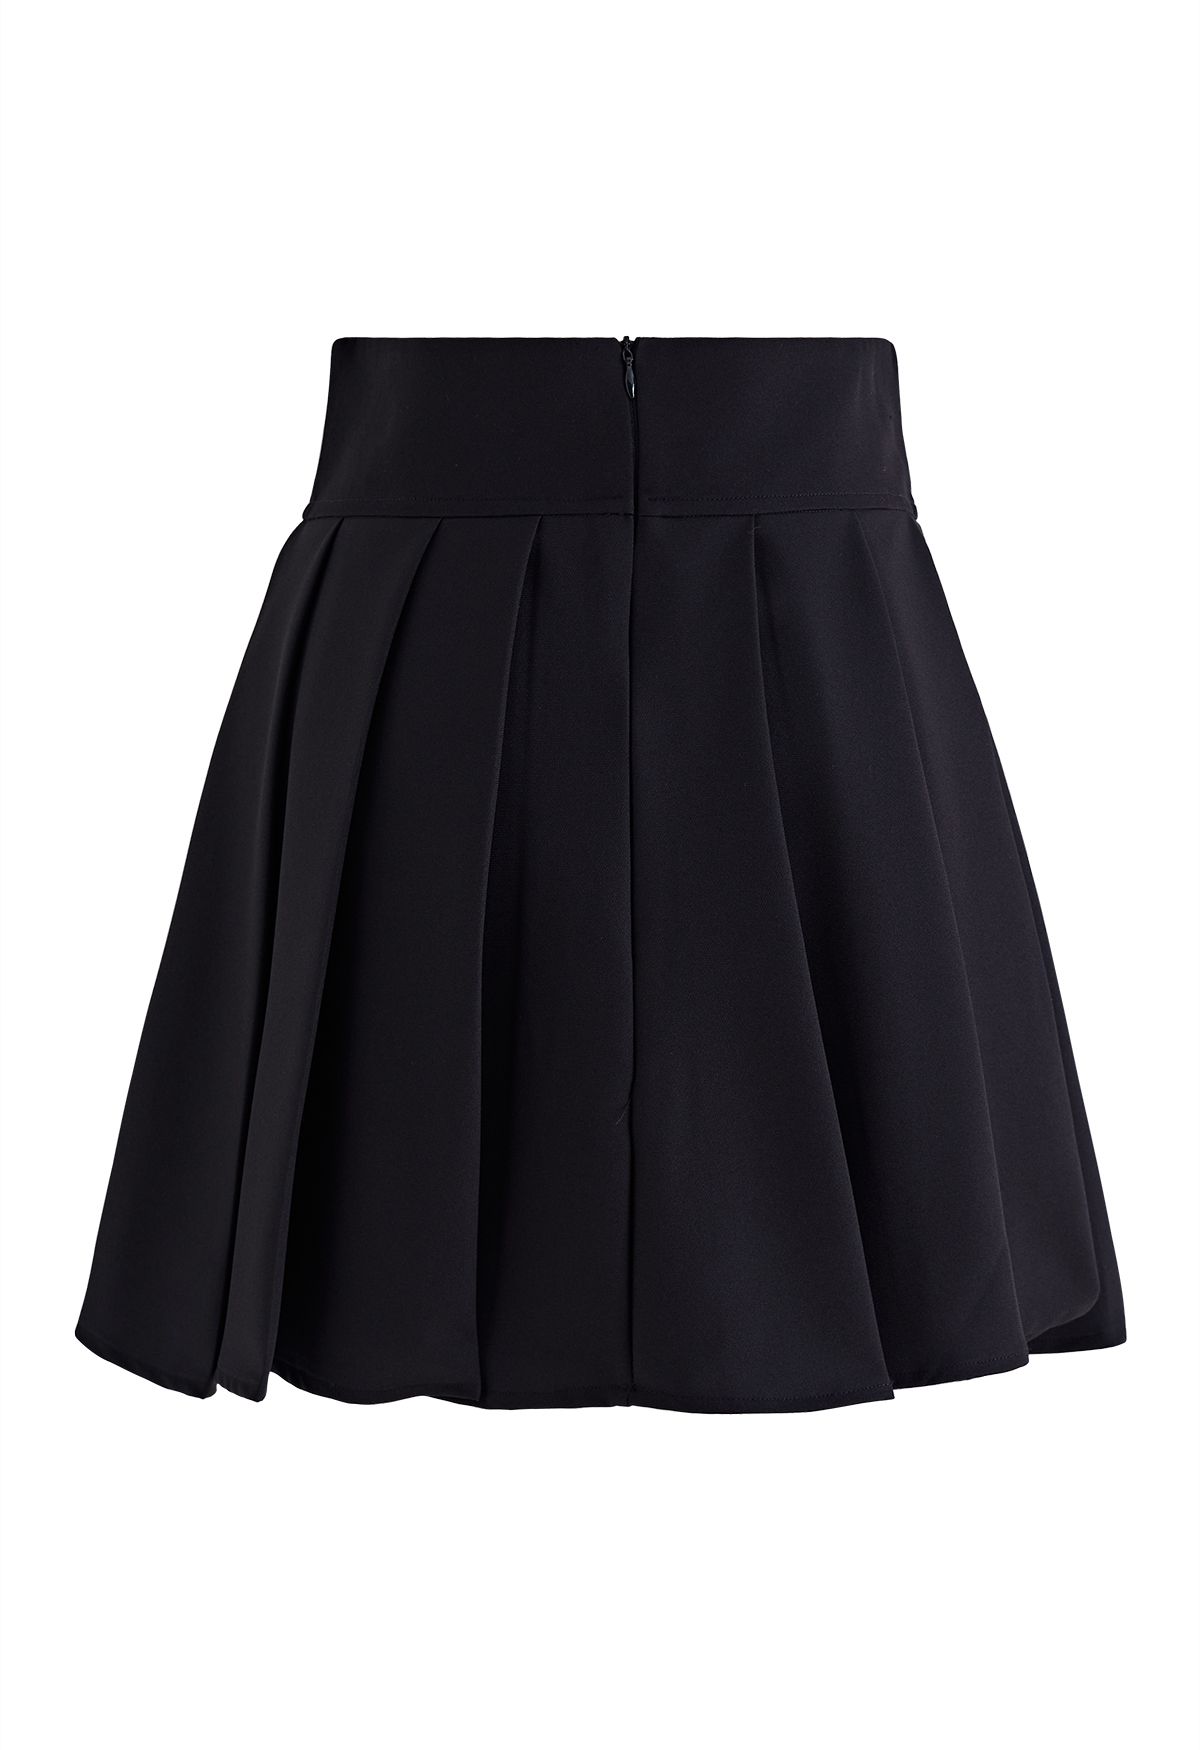 Golden Button Pleated Flare Mini Skirt in Black